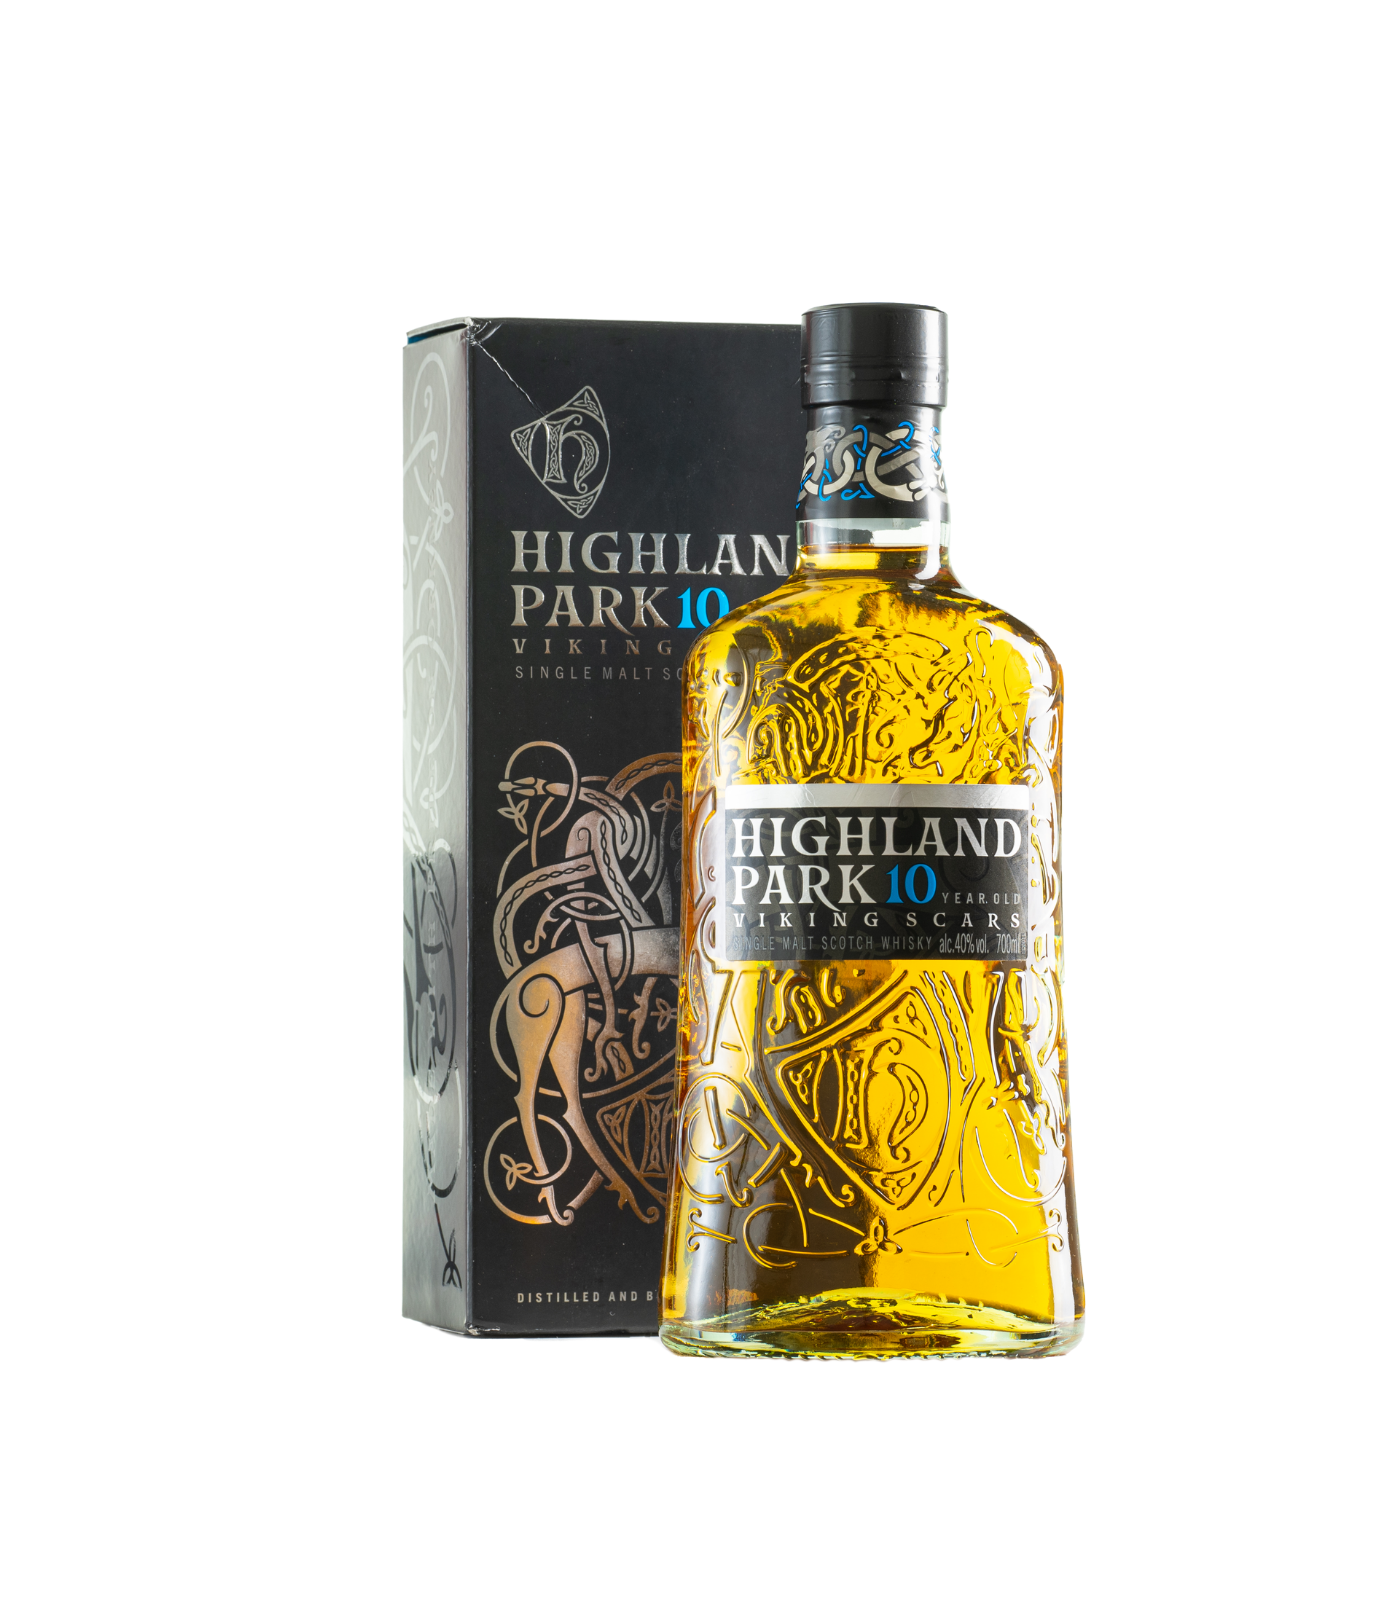 Highland Park 10 Year Old - Viking Scars Single Malt Scotch Whisky (70cl; 40%)